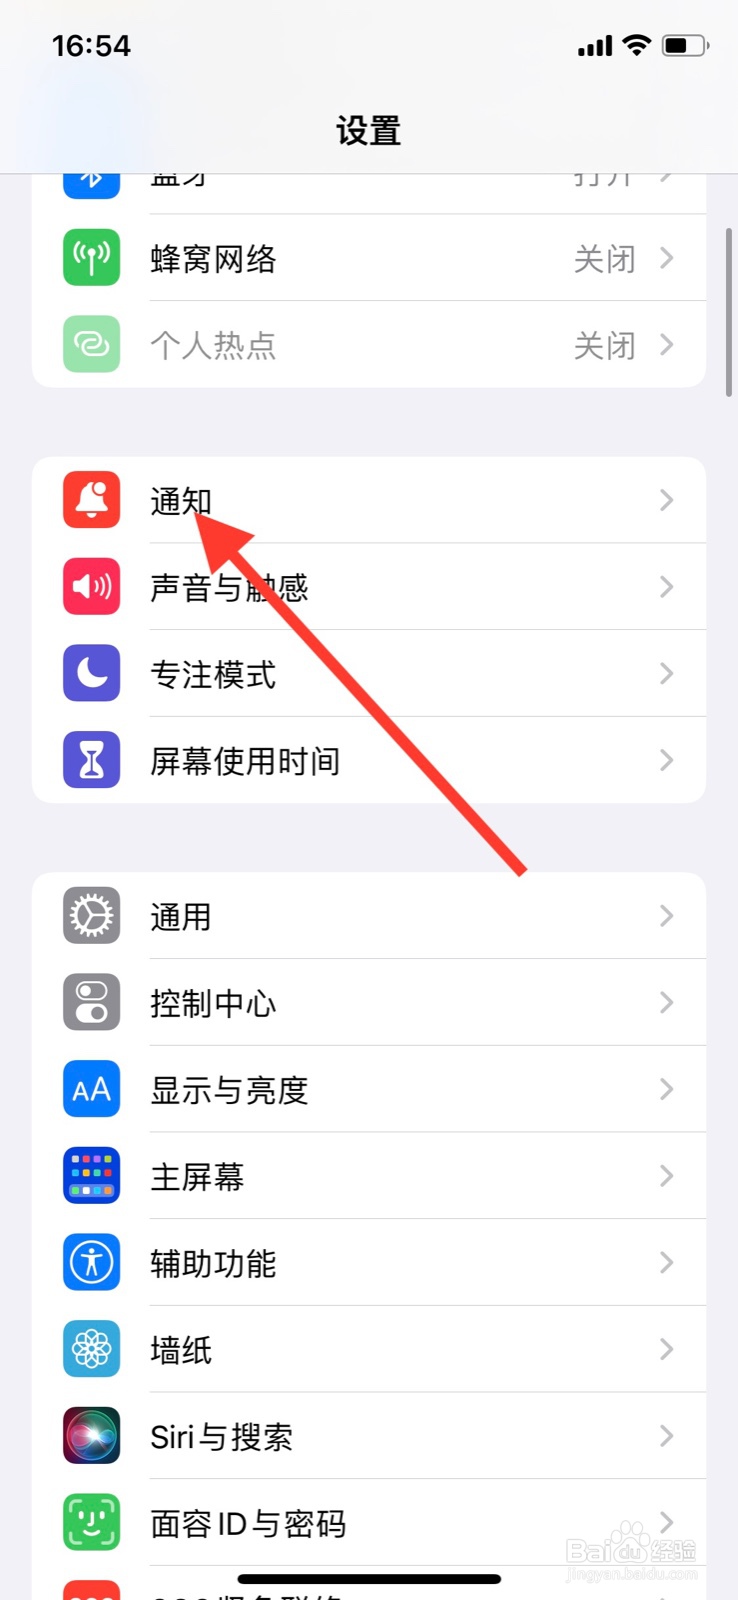 <b>iPhone横幅允许“欢乐斗地主”app通知显示</b>